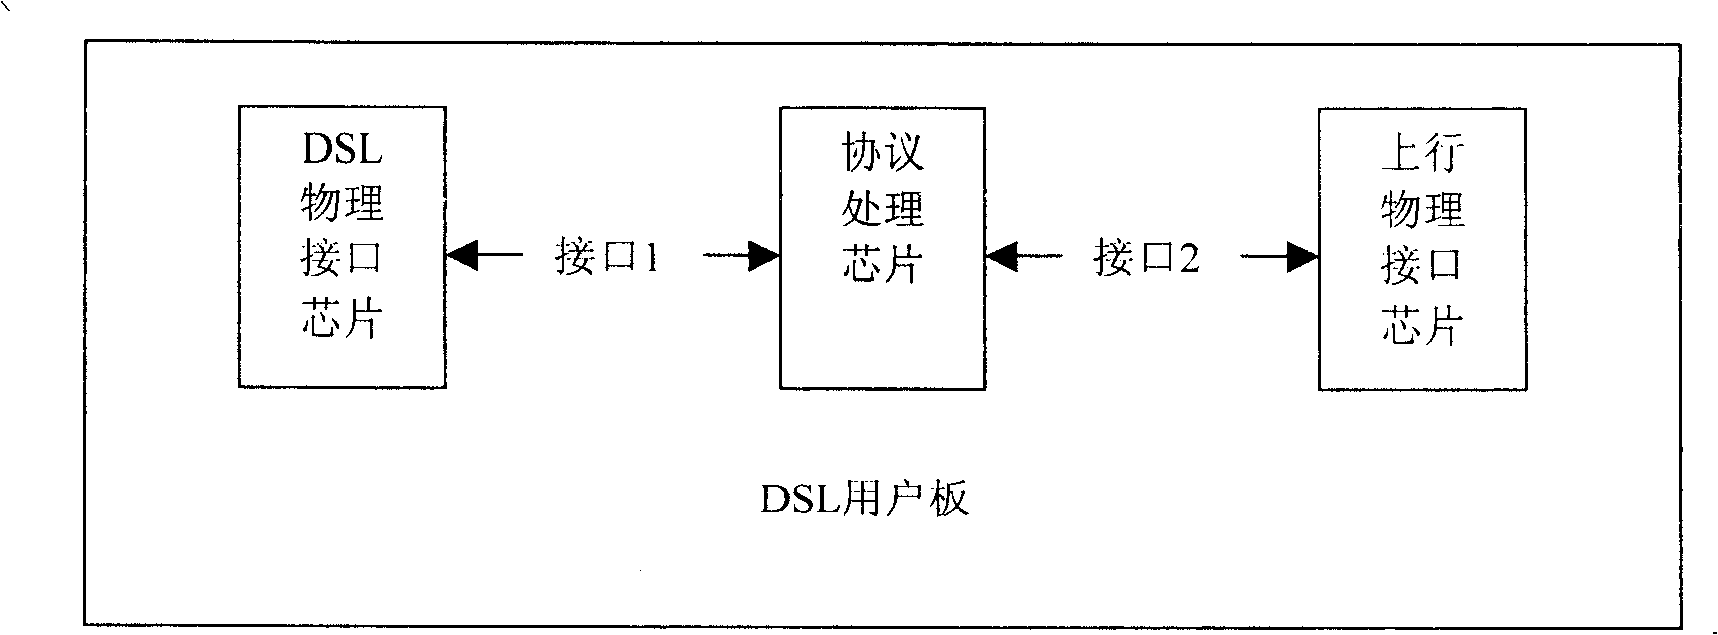 Method for improving DSL user board bandwidth and DSL user board using the same